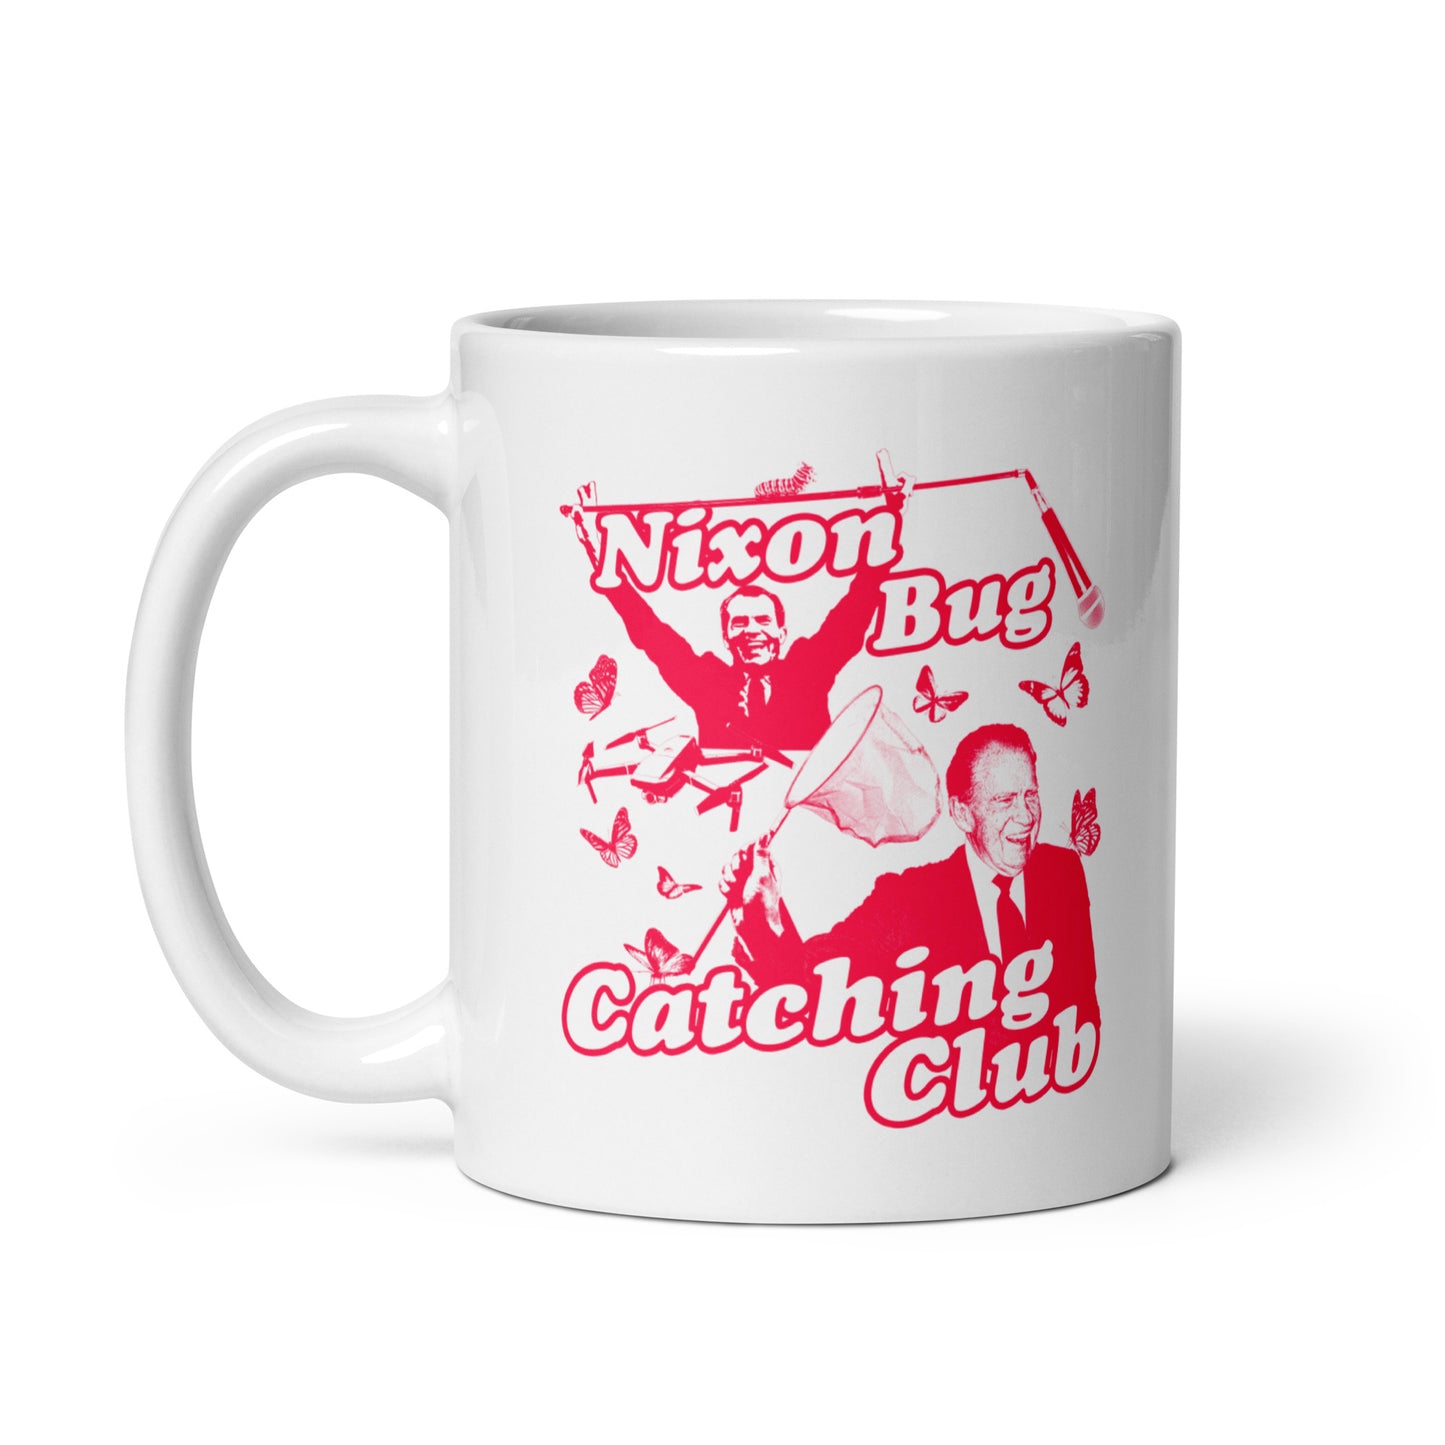 Nixon Bug Catching Club mug